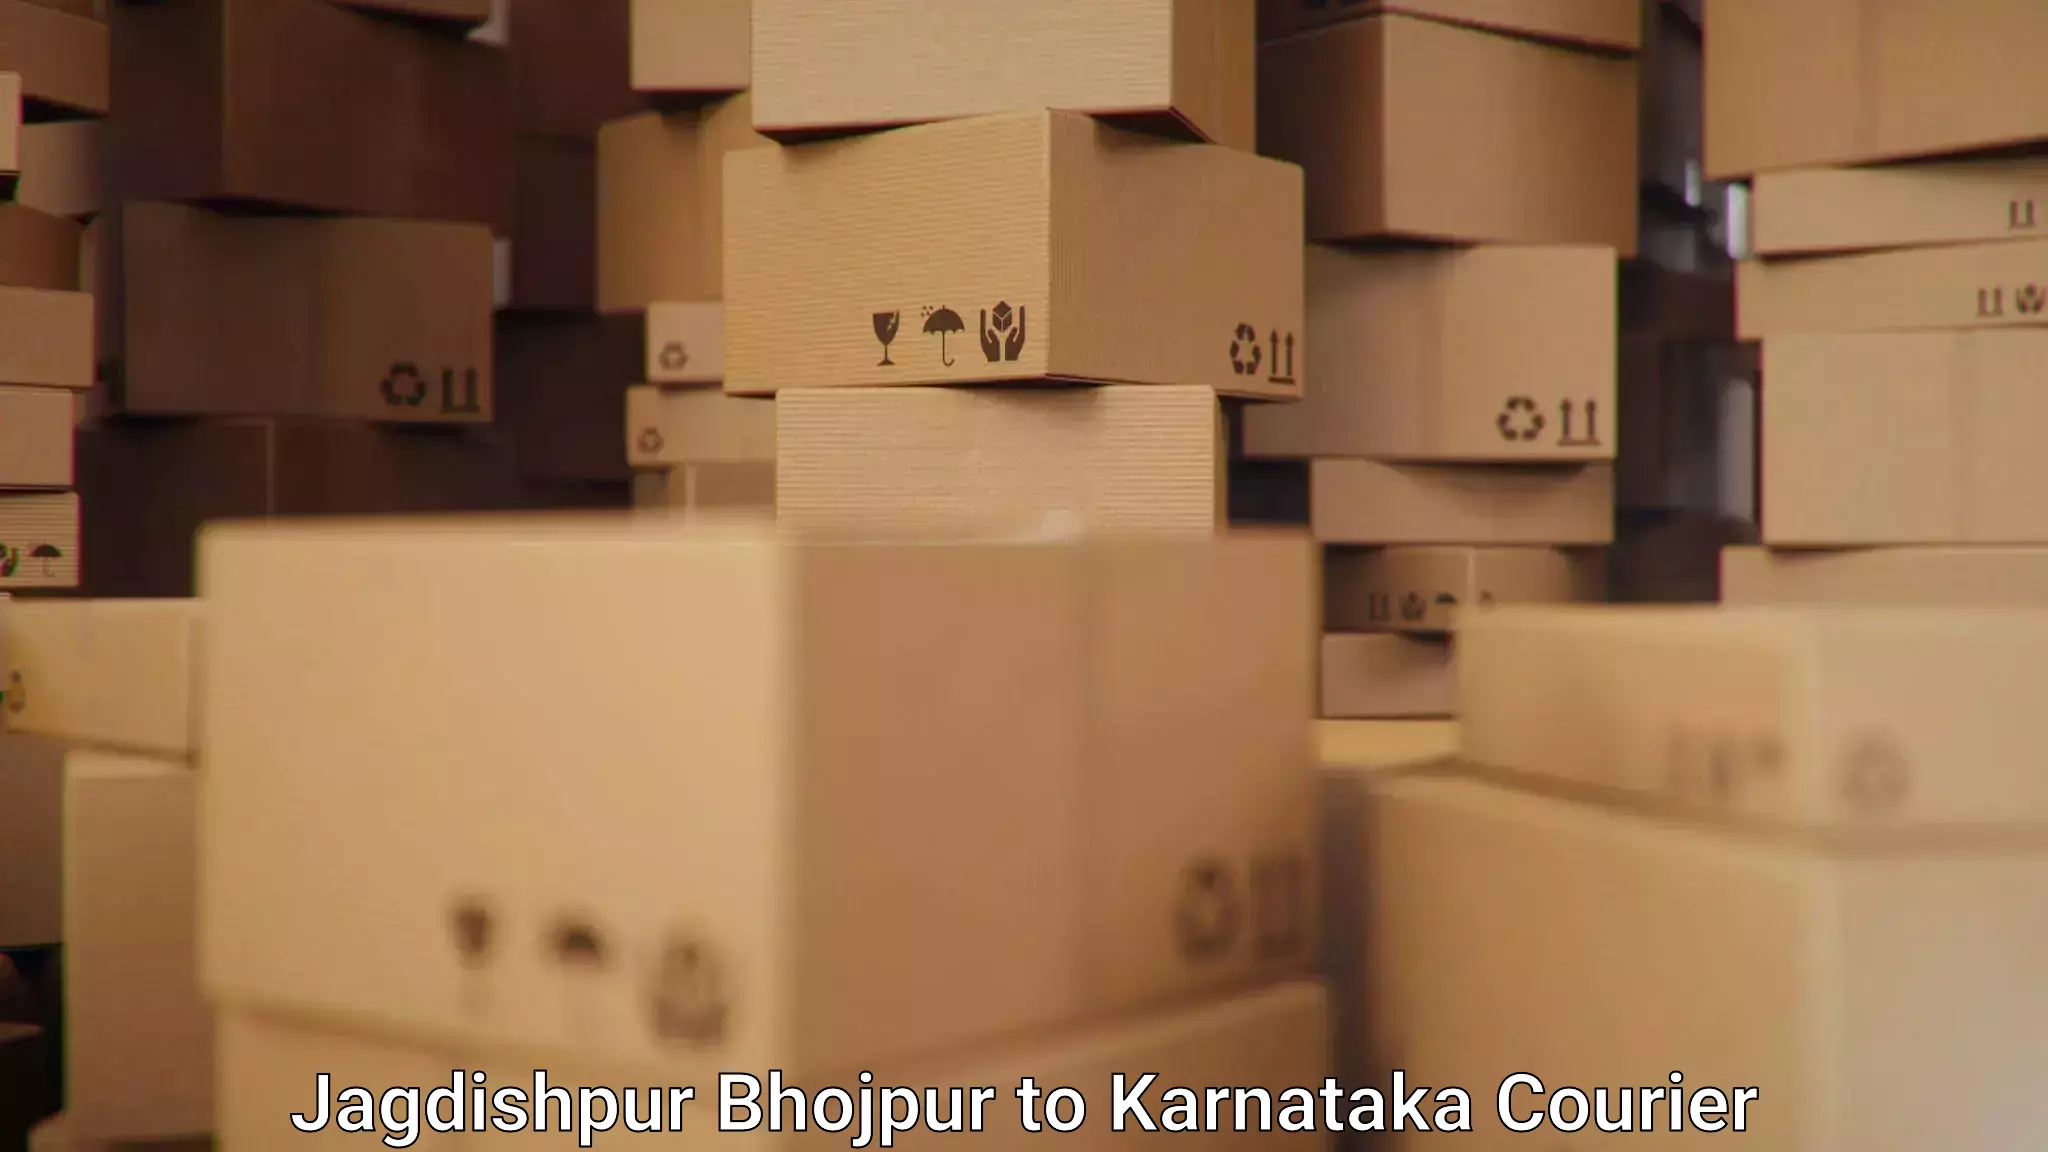 Courier app Jagdishpur Bhojpur to Vijayapura